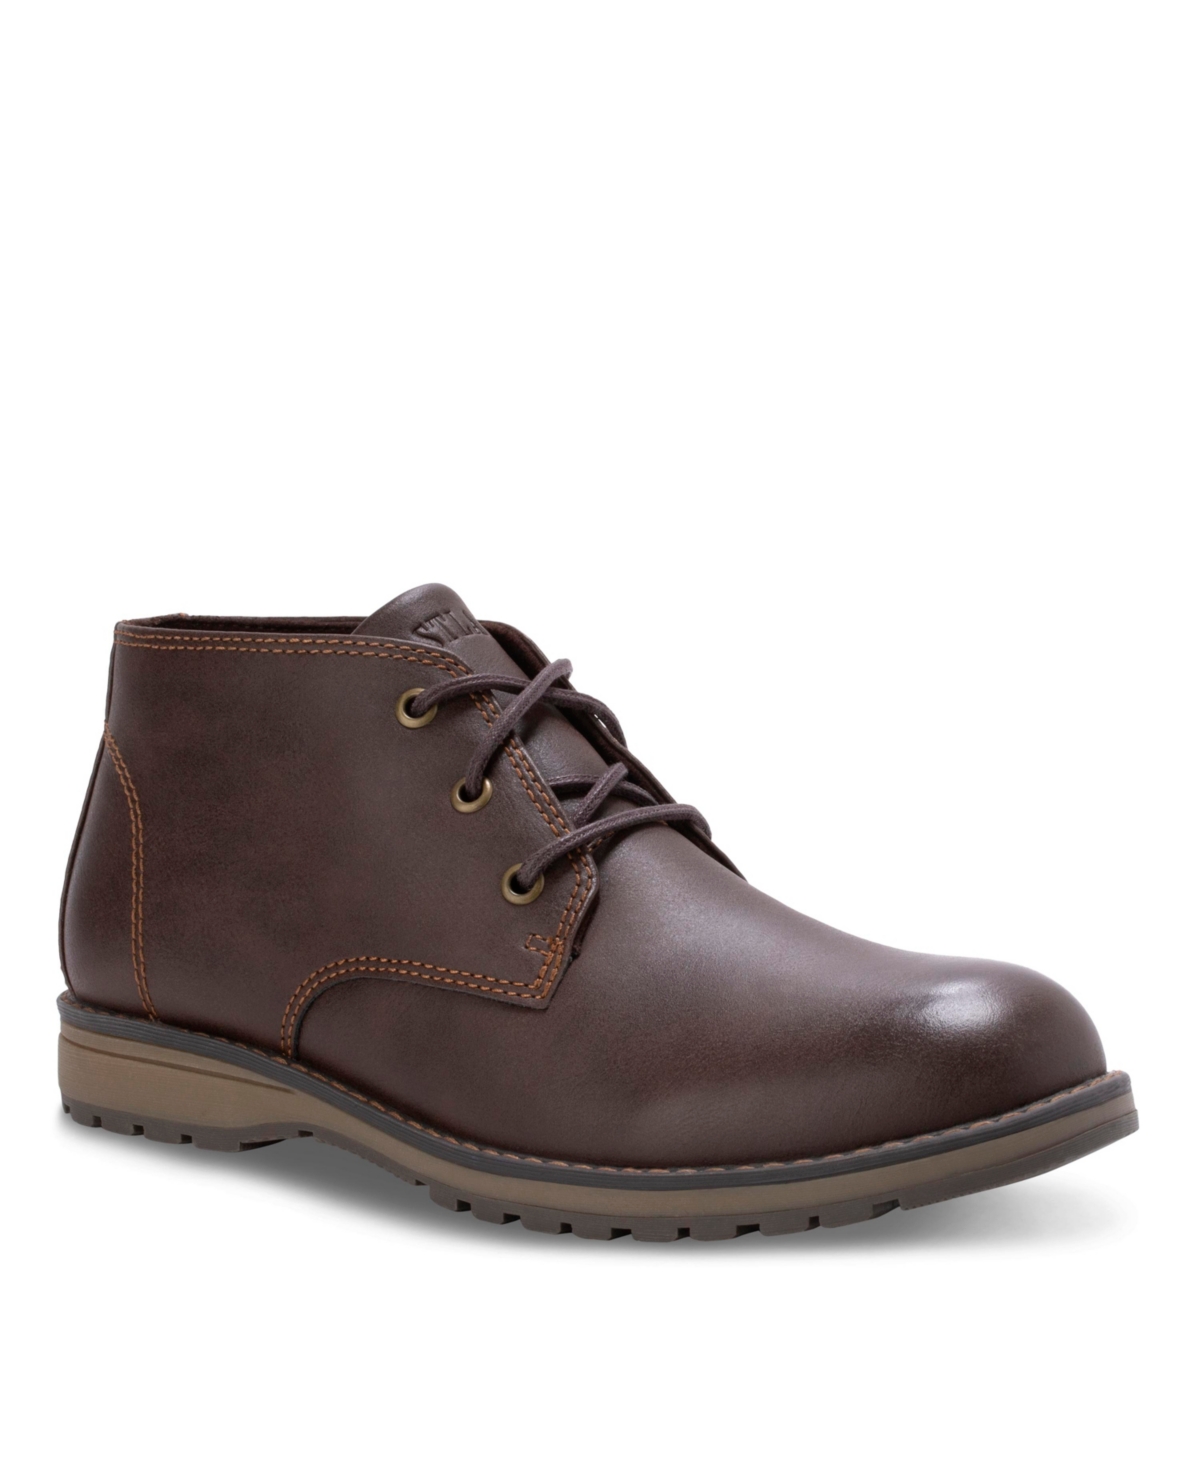 Men's Devin Chukka Casual Boots - Dark Brown